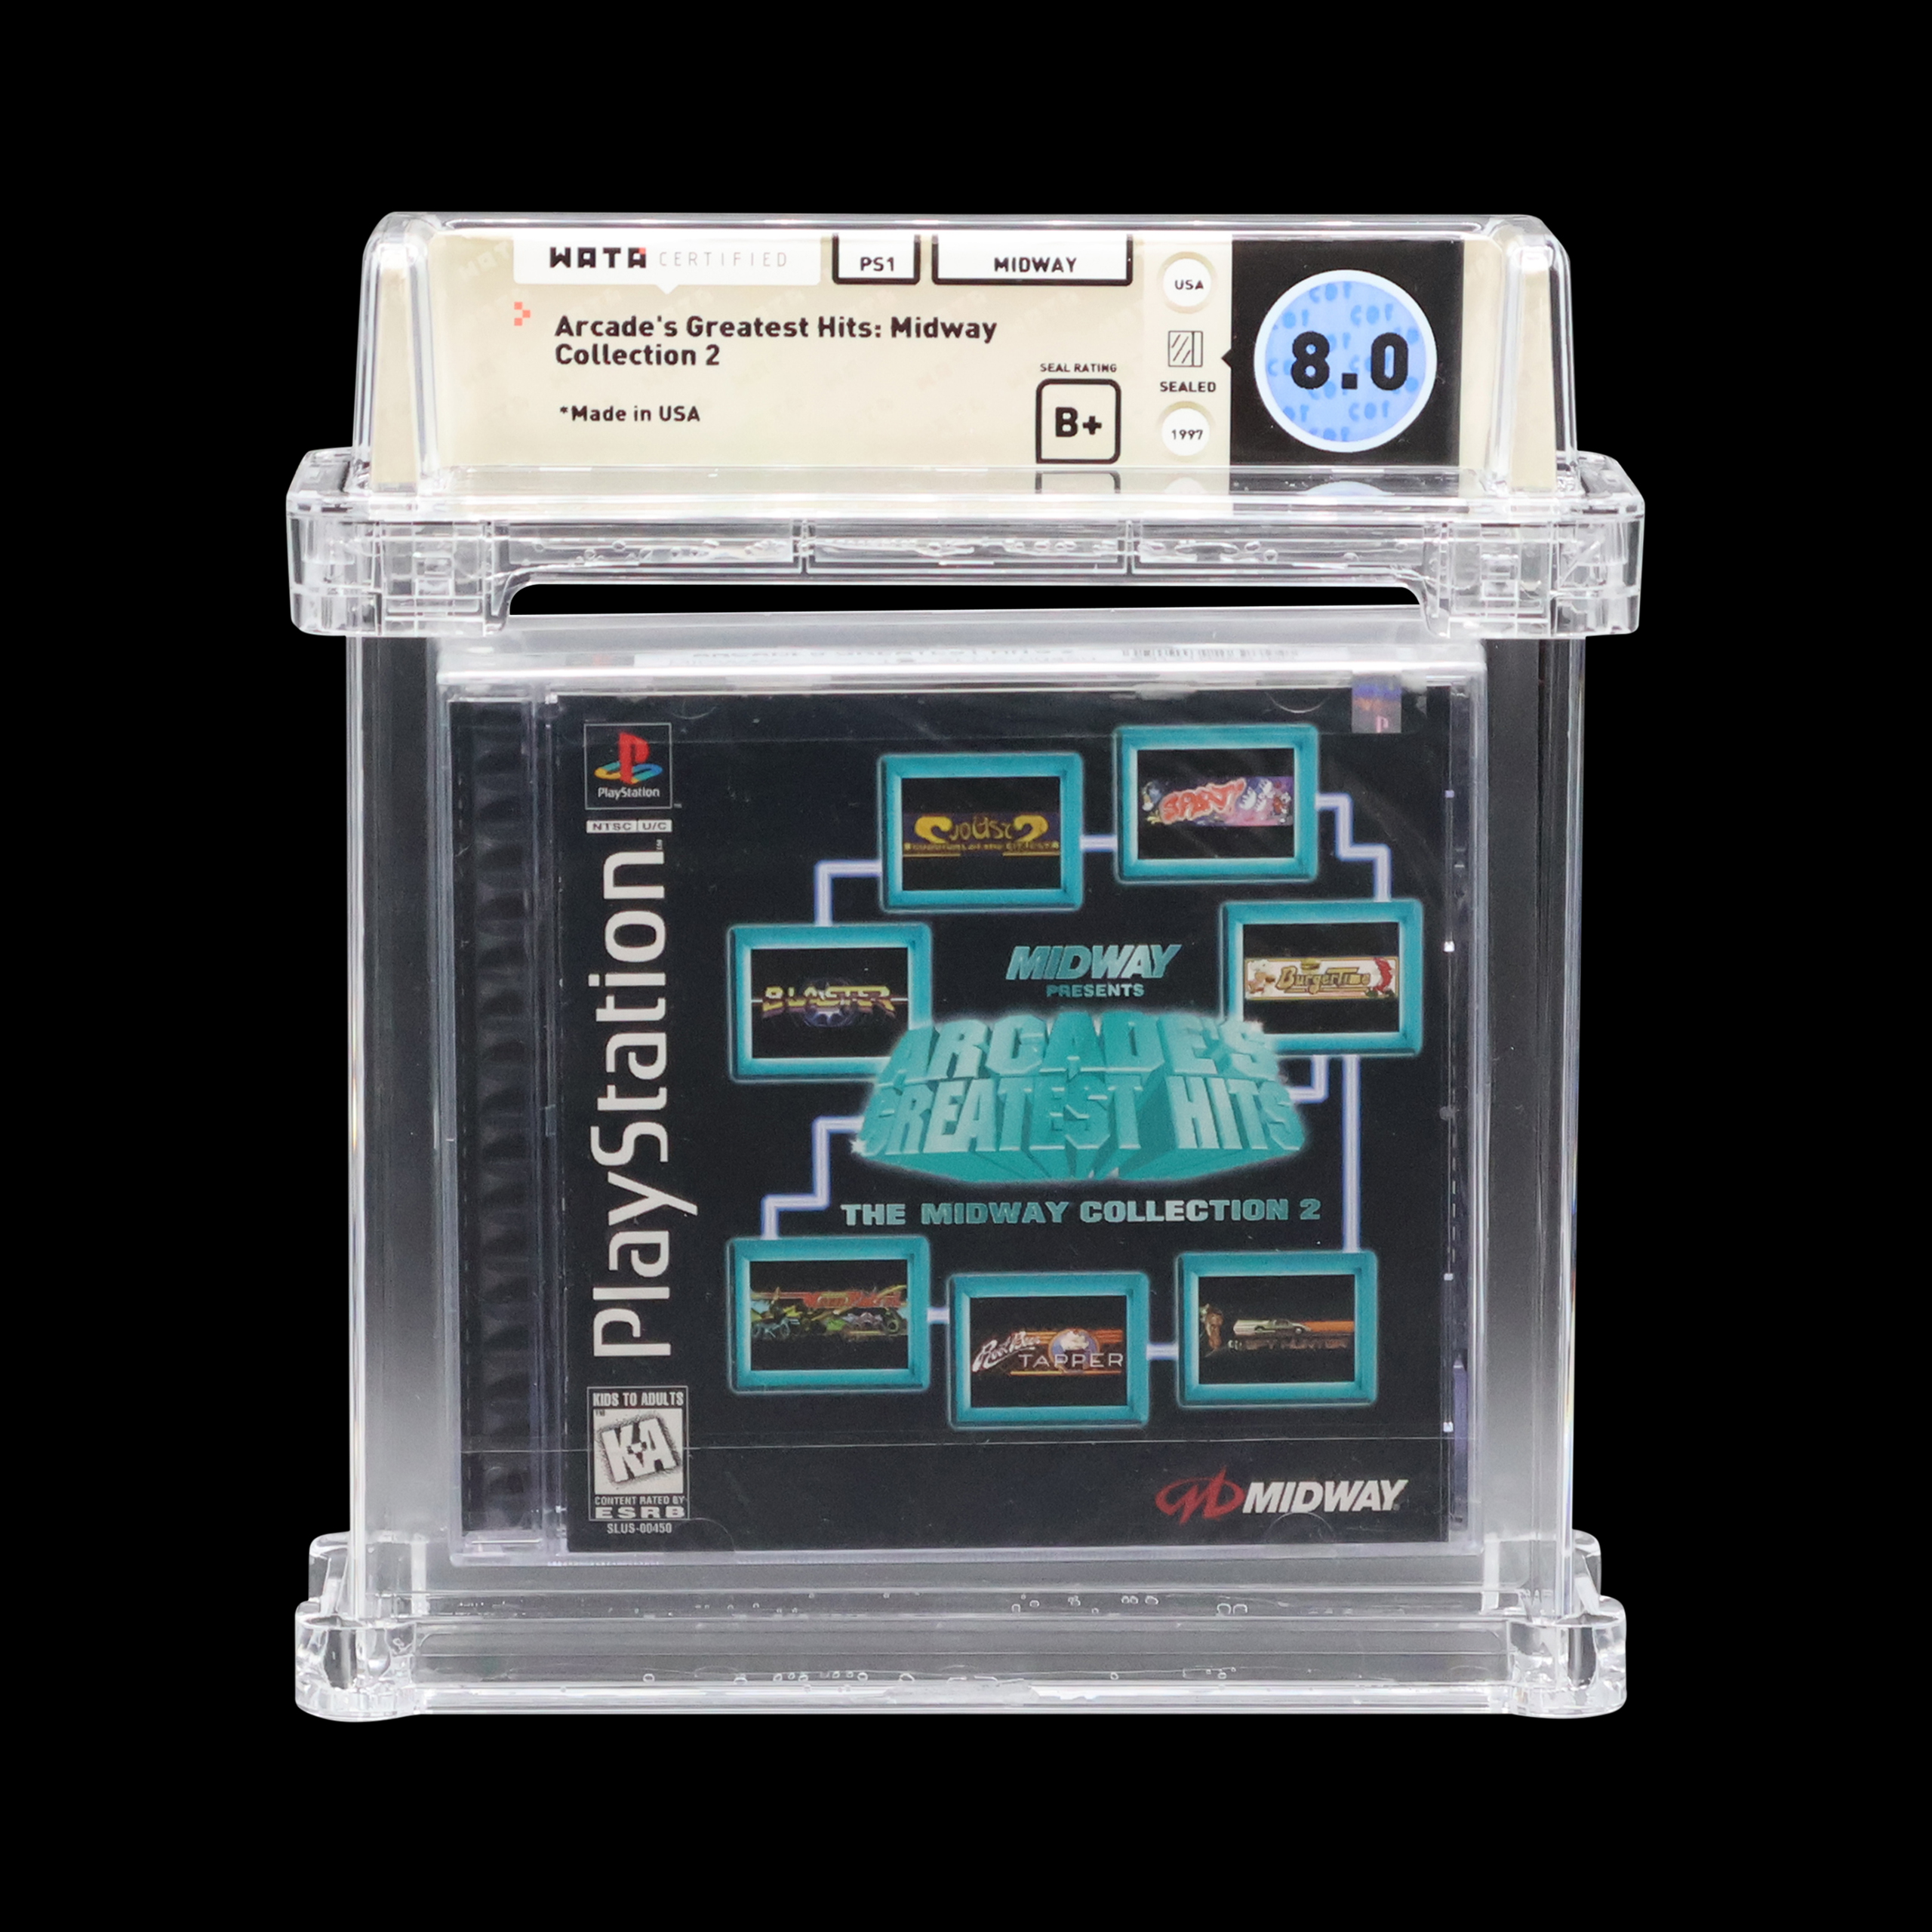 Graded PlayStation 2 Memory Card in acrylic display case, WATA score 8.0.